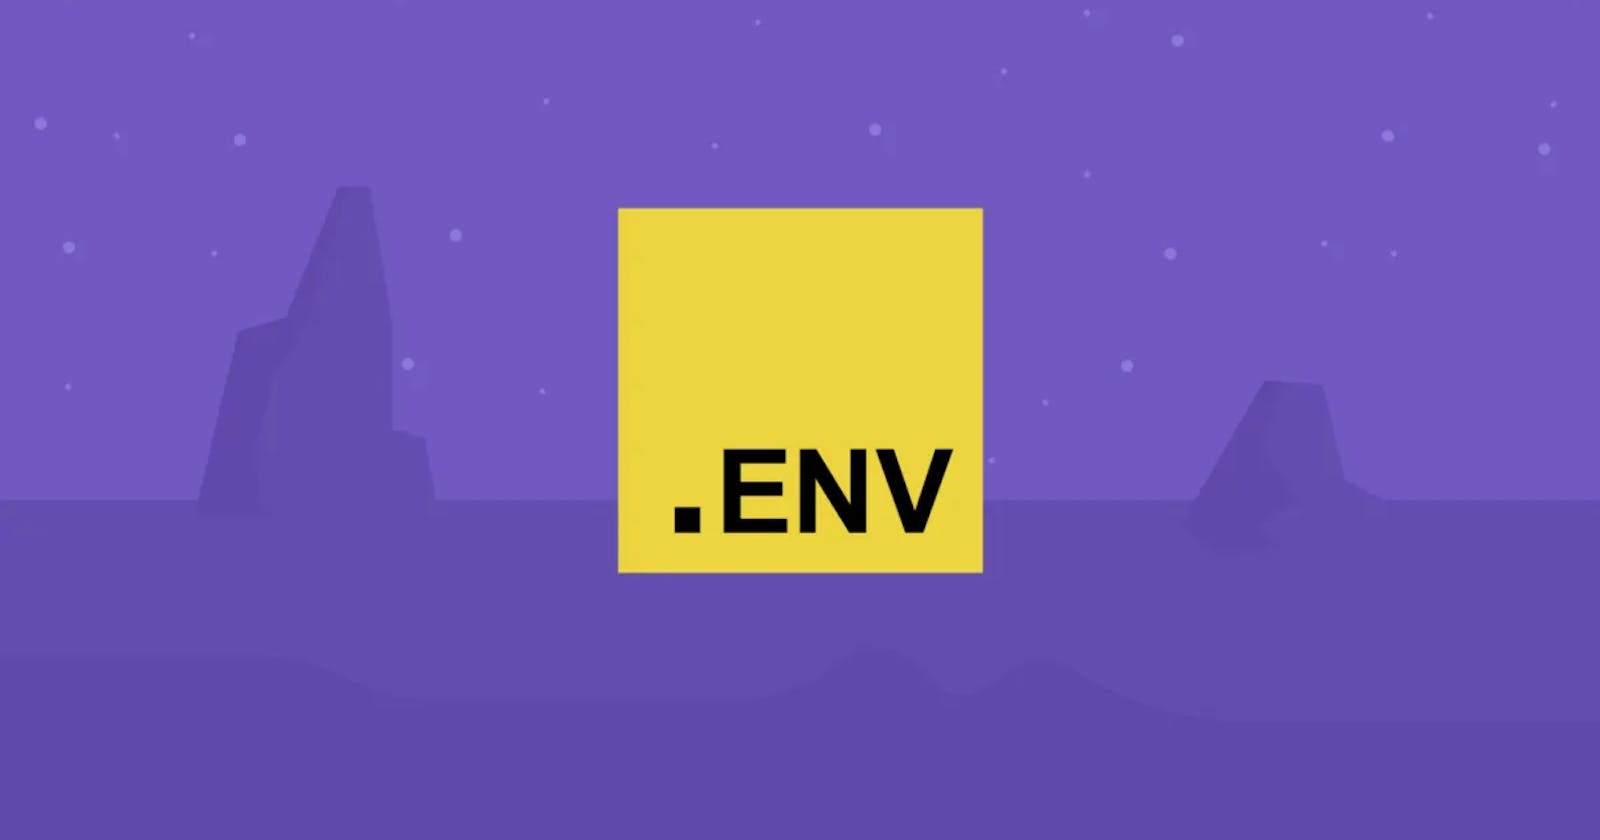 Next time create an .ENV file